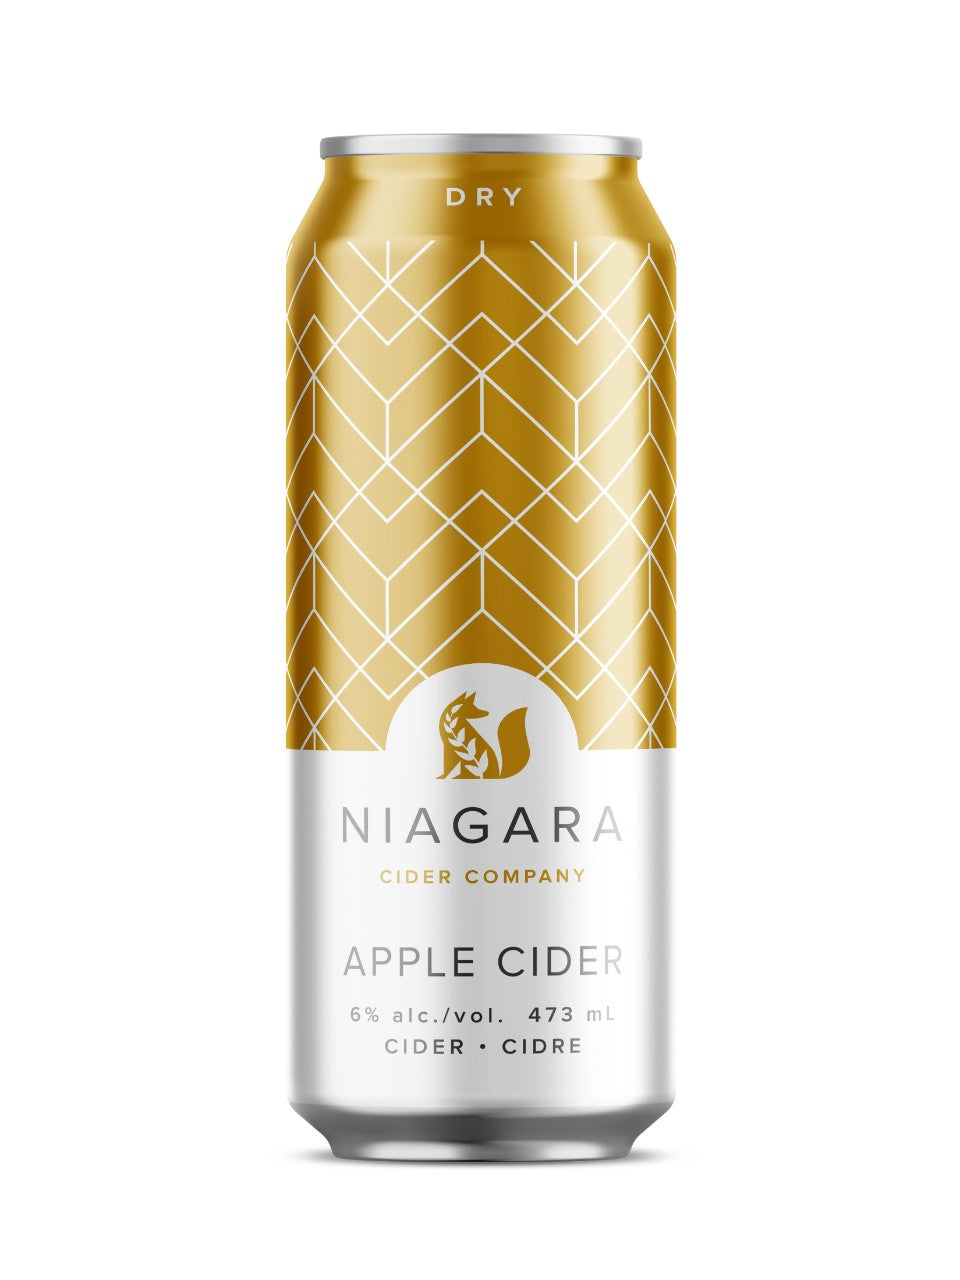 Niagara Cider Company No.1 Dry Apple Cider 473 mL can